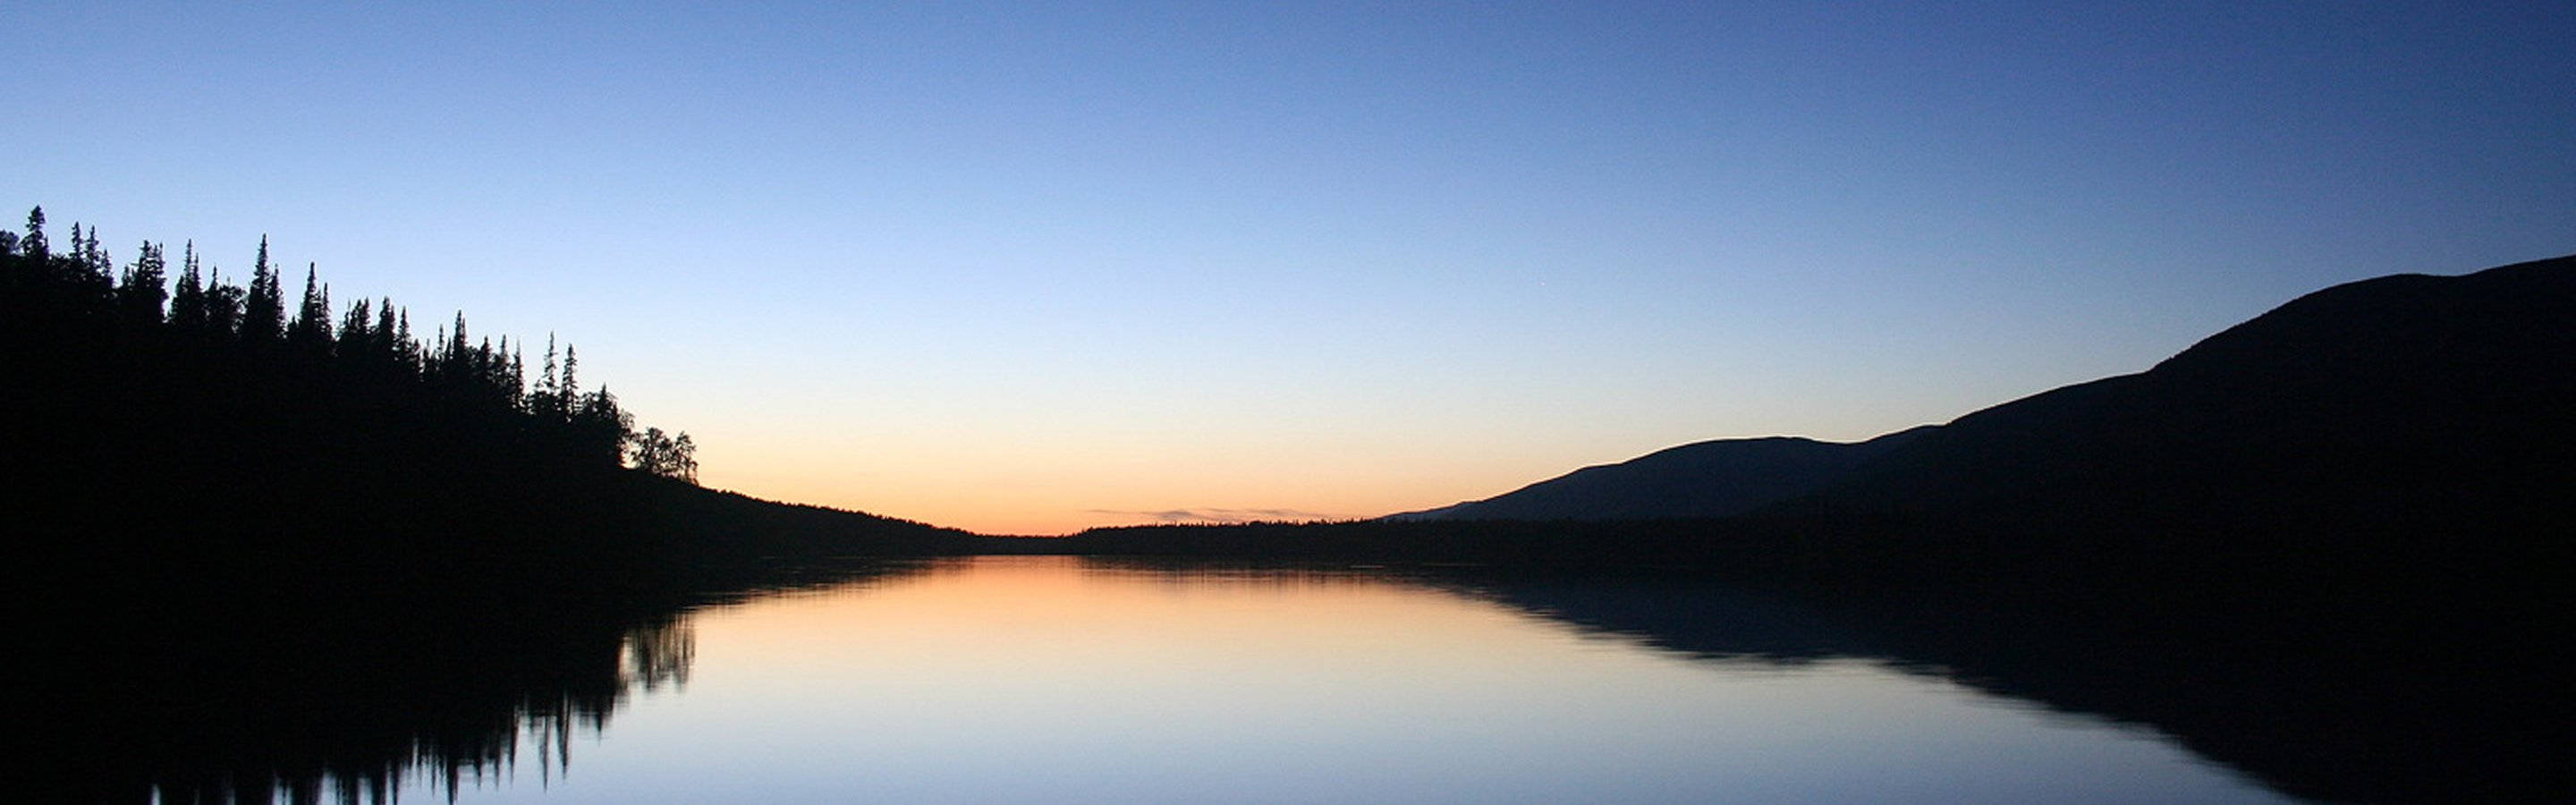 High Resolution Dual Monitor Lake At Sunrise Background